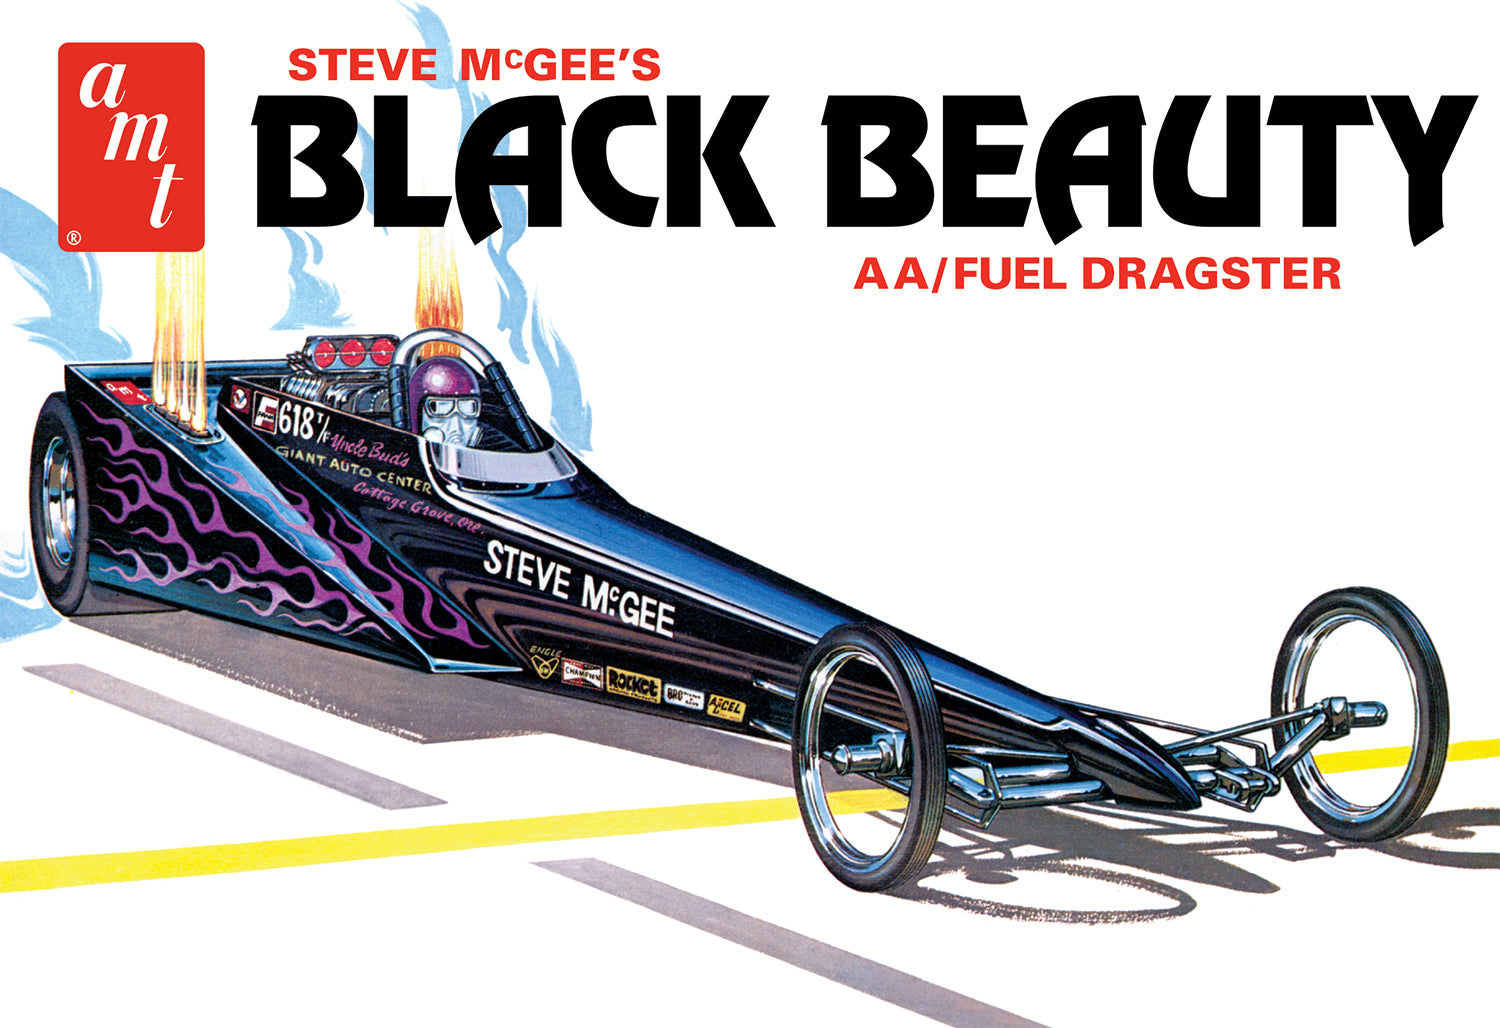 AMT 1214 Steve McGee Black Beauty Wedge Dragster 1/25 Scale Model Kit